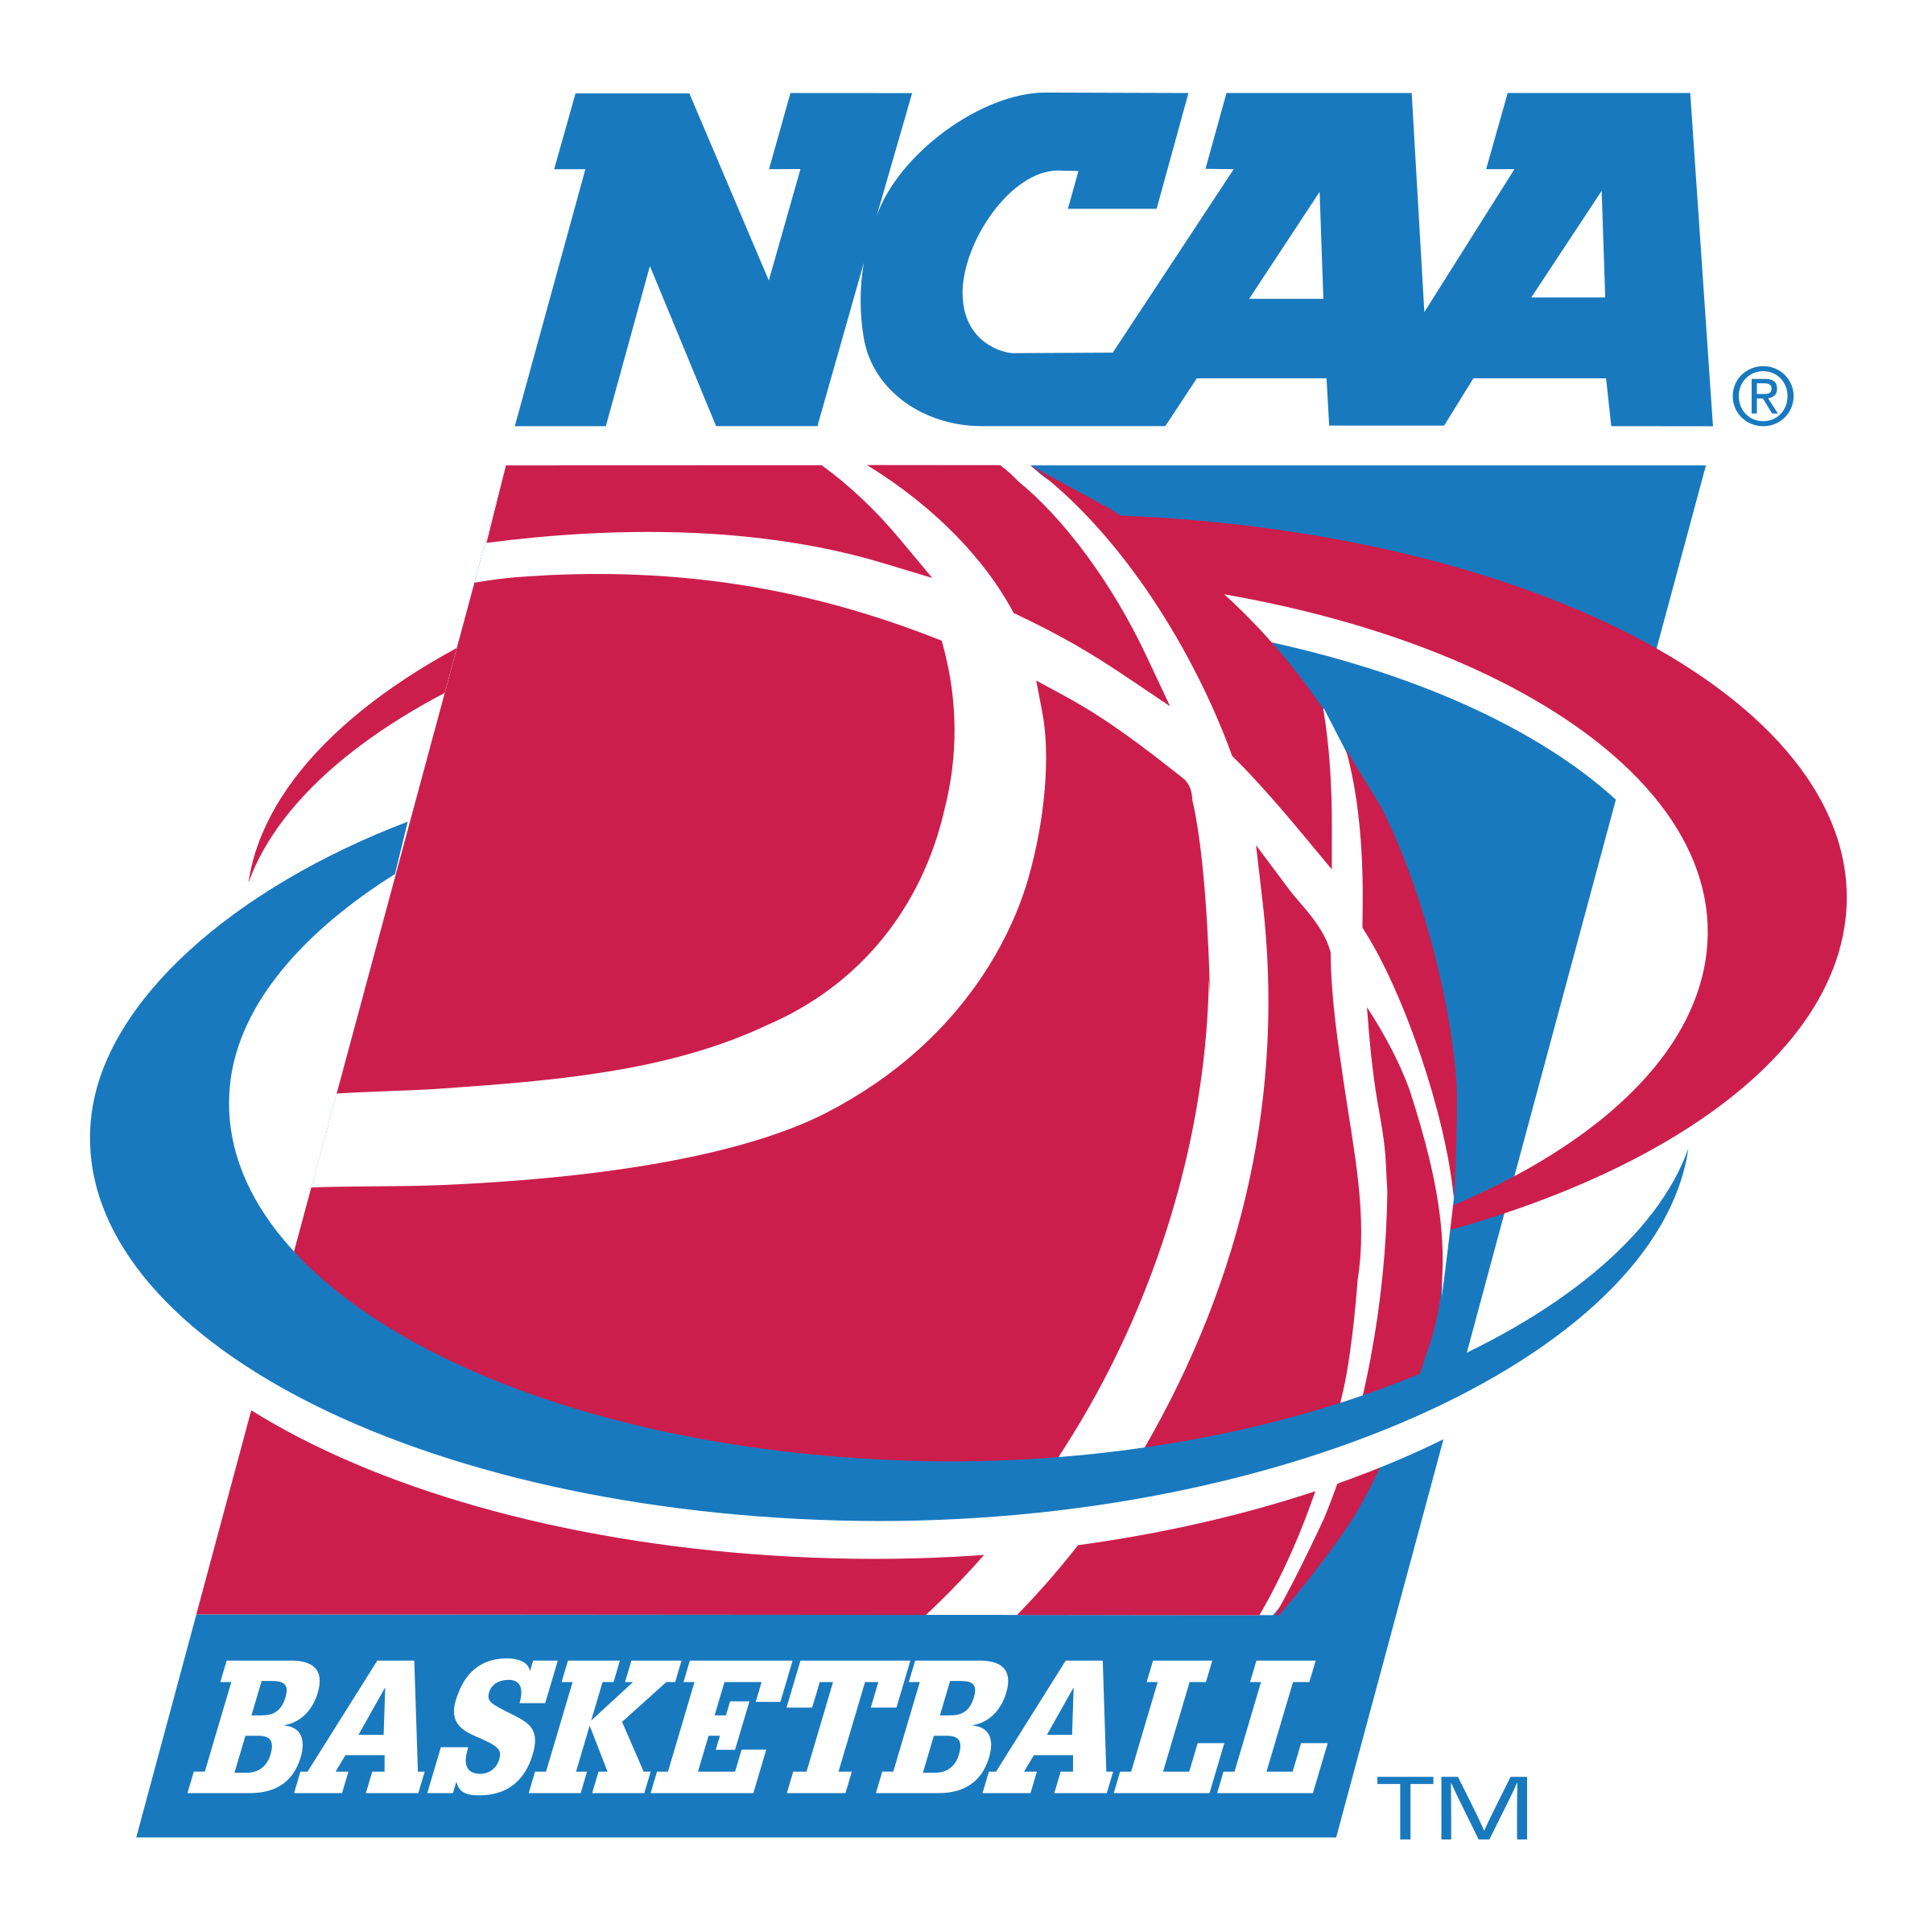 Transparent Basketball Logo - NCAA Basketball Logo PNG Transparent & SVG Vector - Freebie Supply